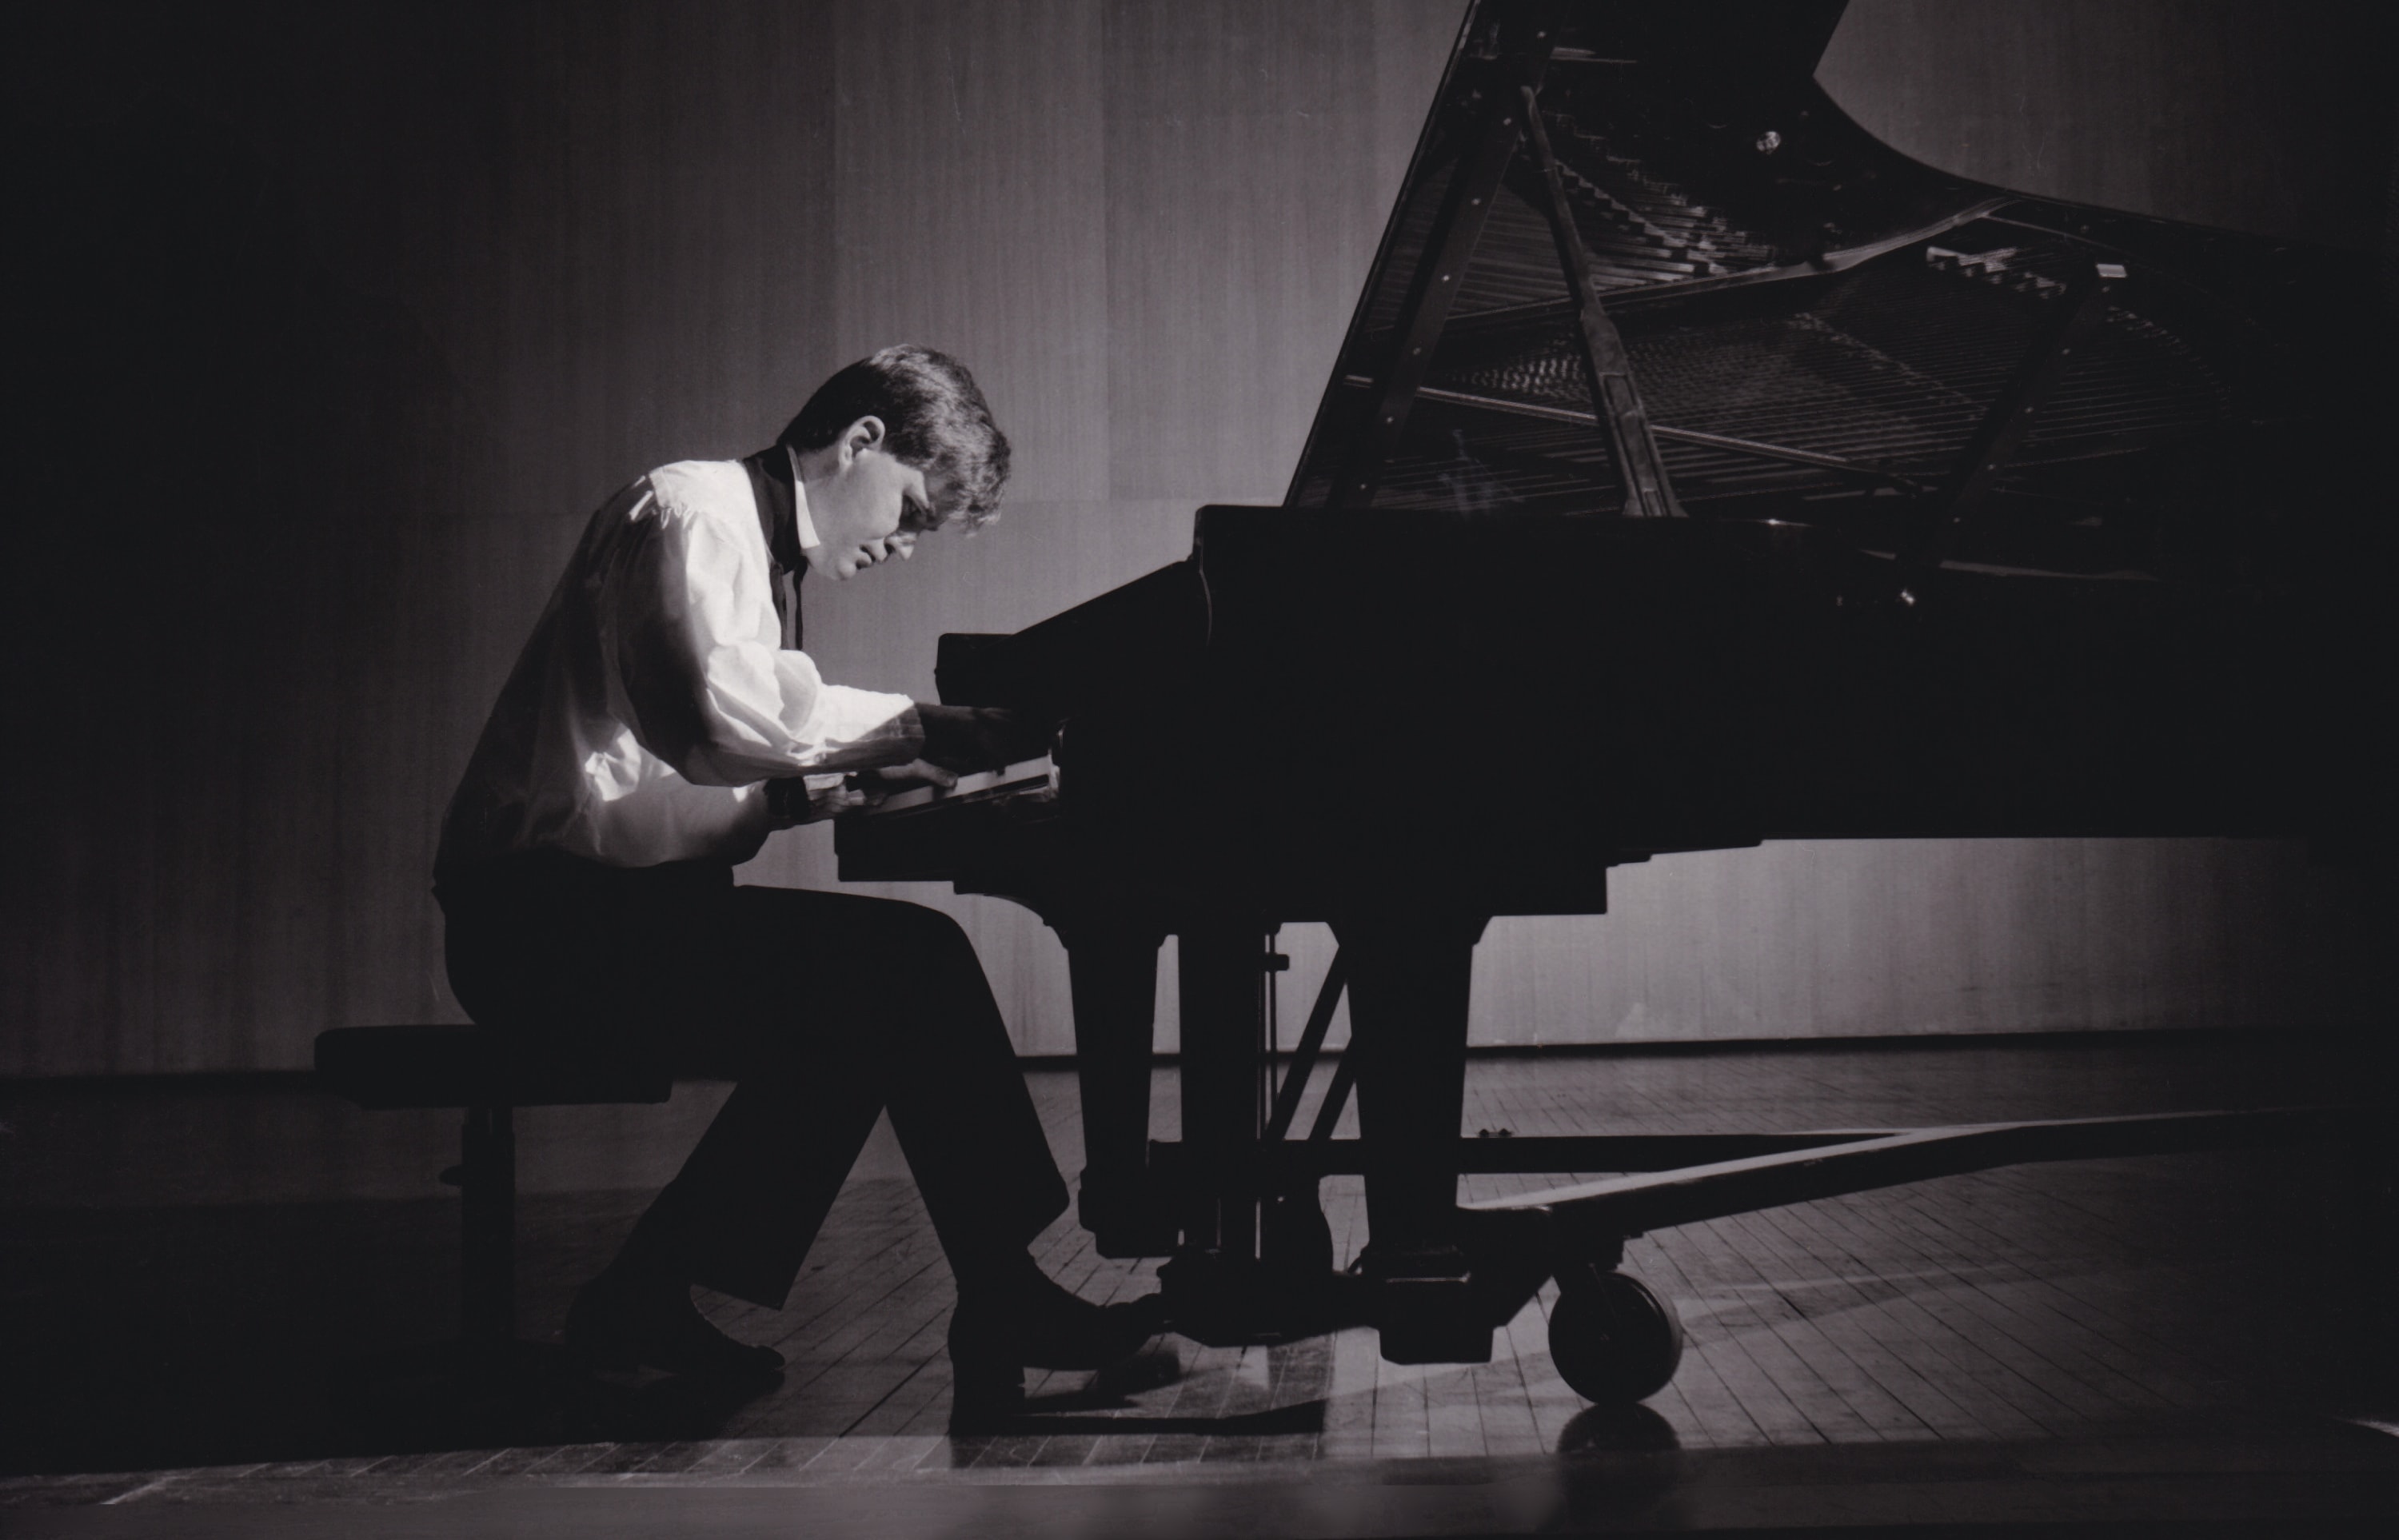 Australian pianist Geoffrey Tozer